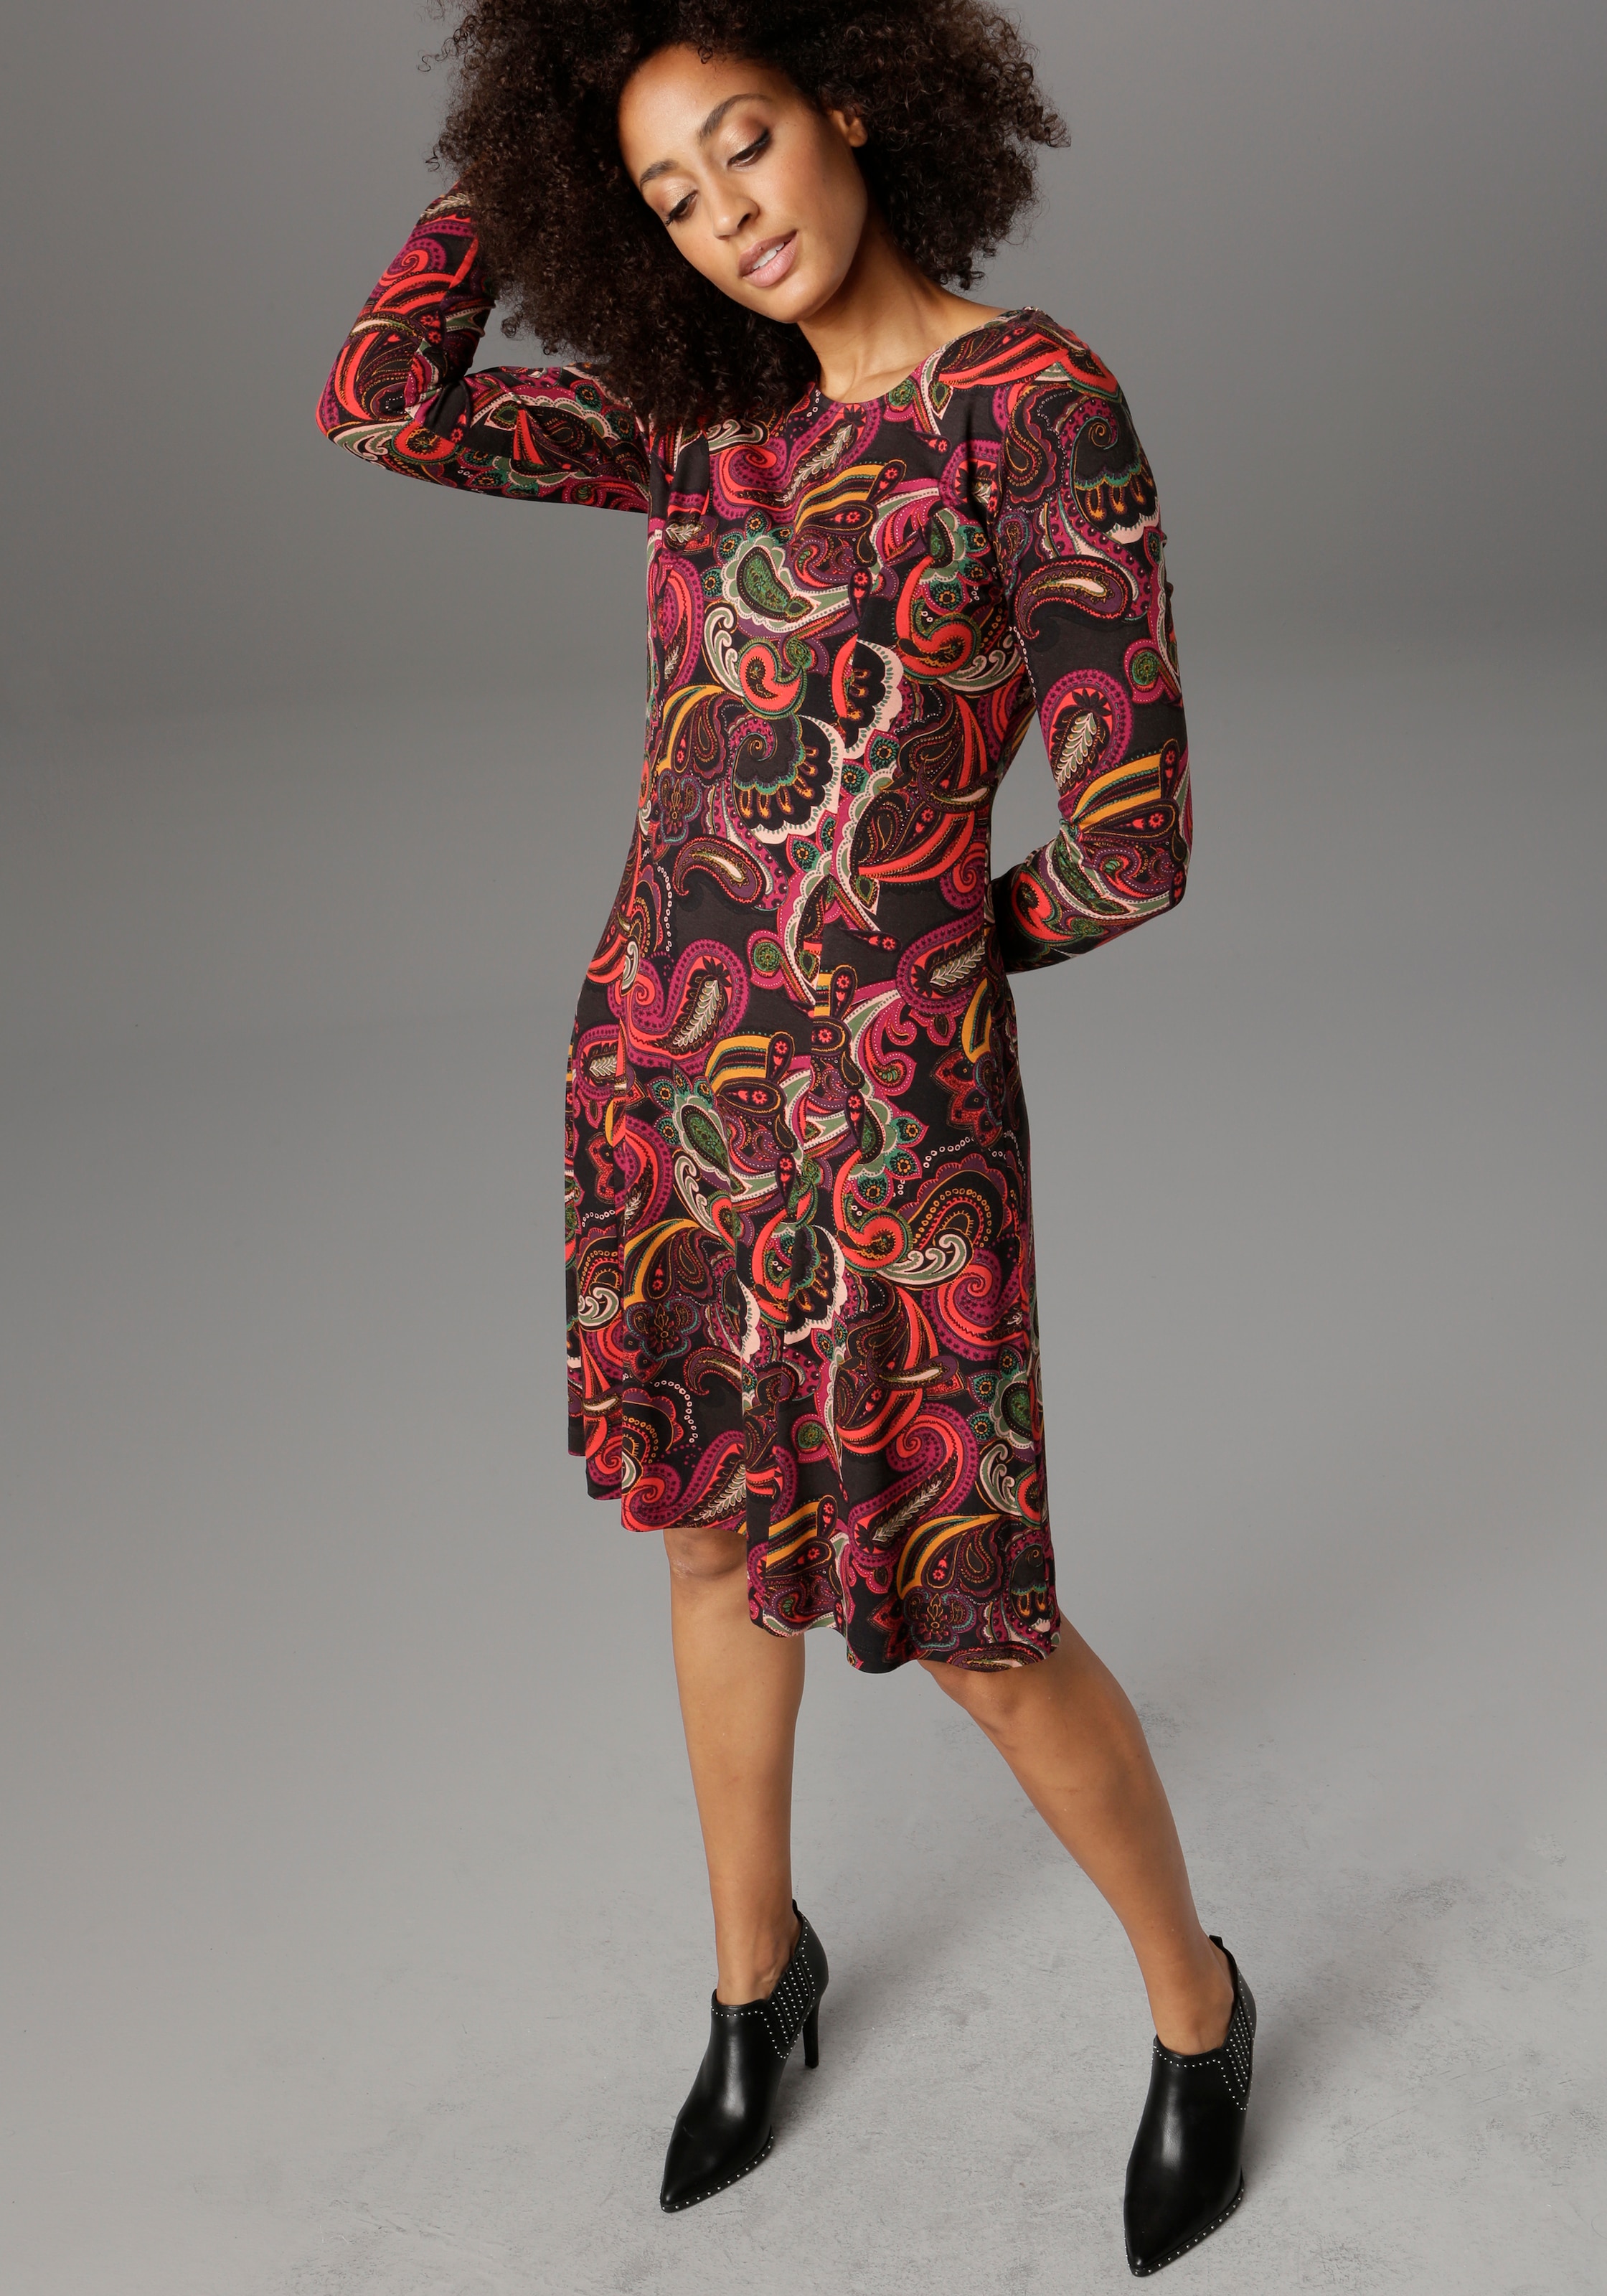 Aniston SELECTED Jerseykleid, Paisley-Druck in satten Farben